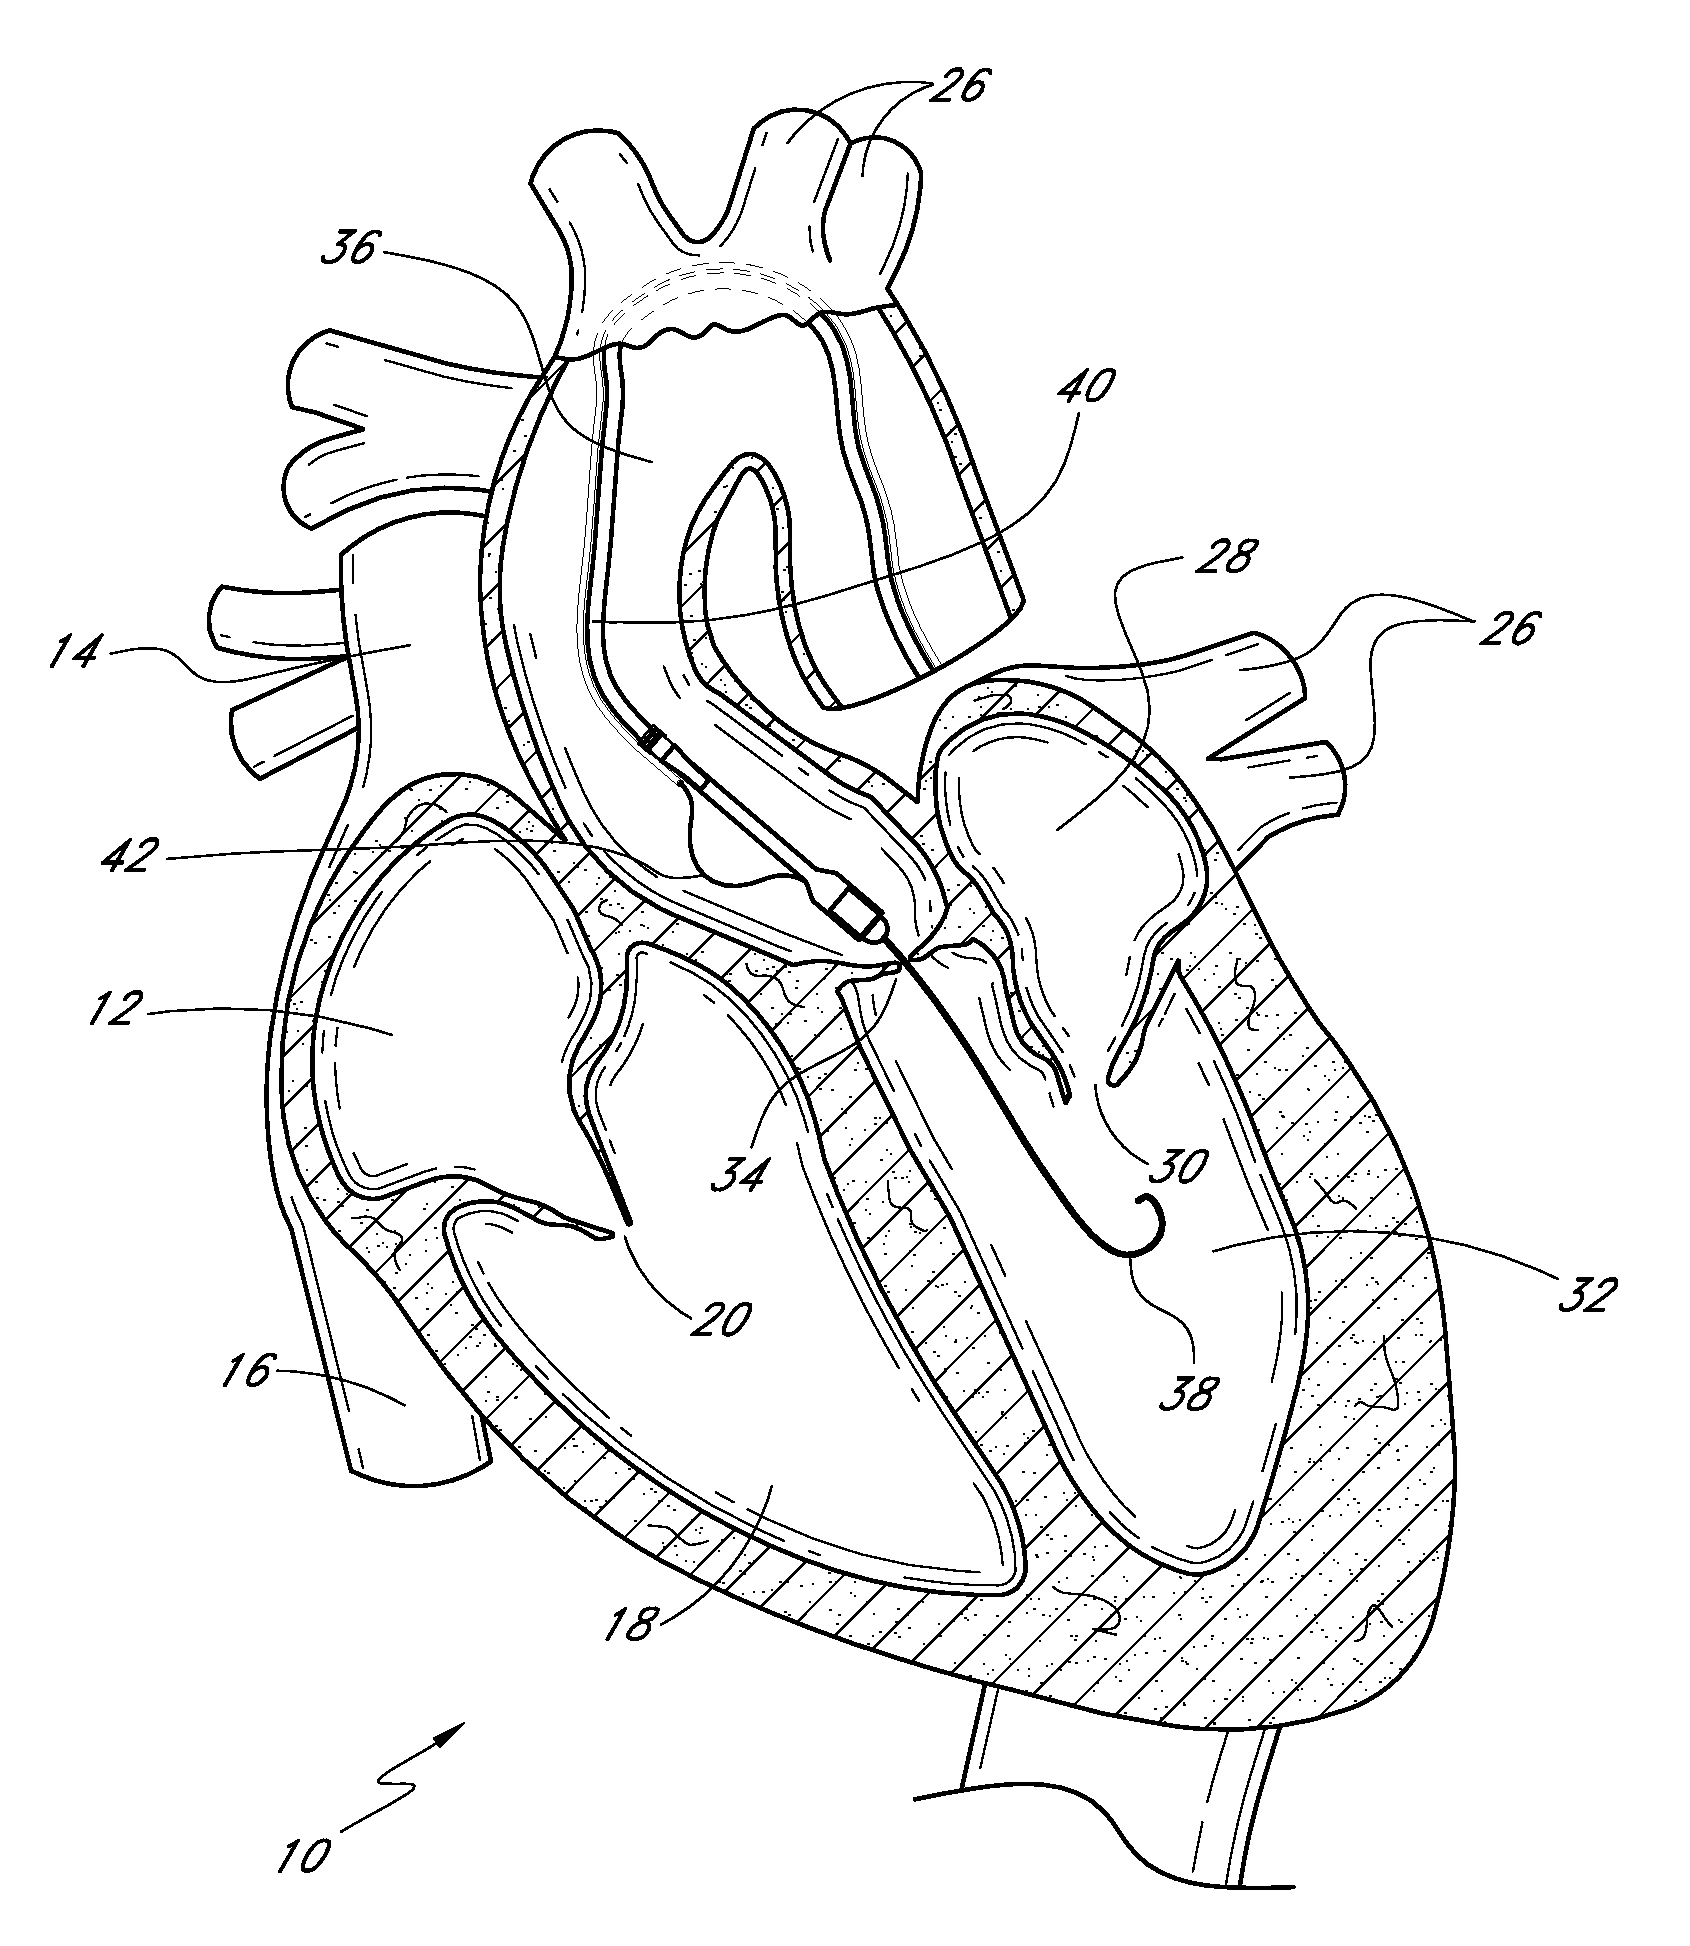 Catheter guidance through a calcified aortic valve